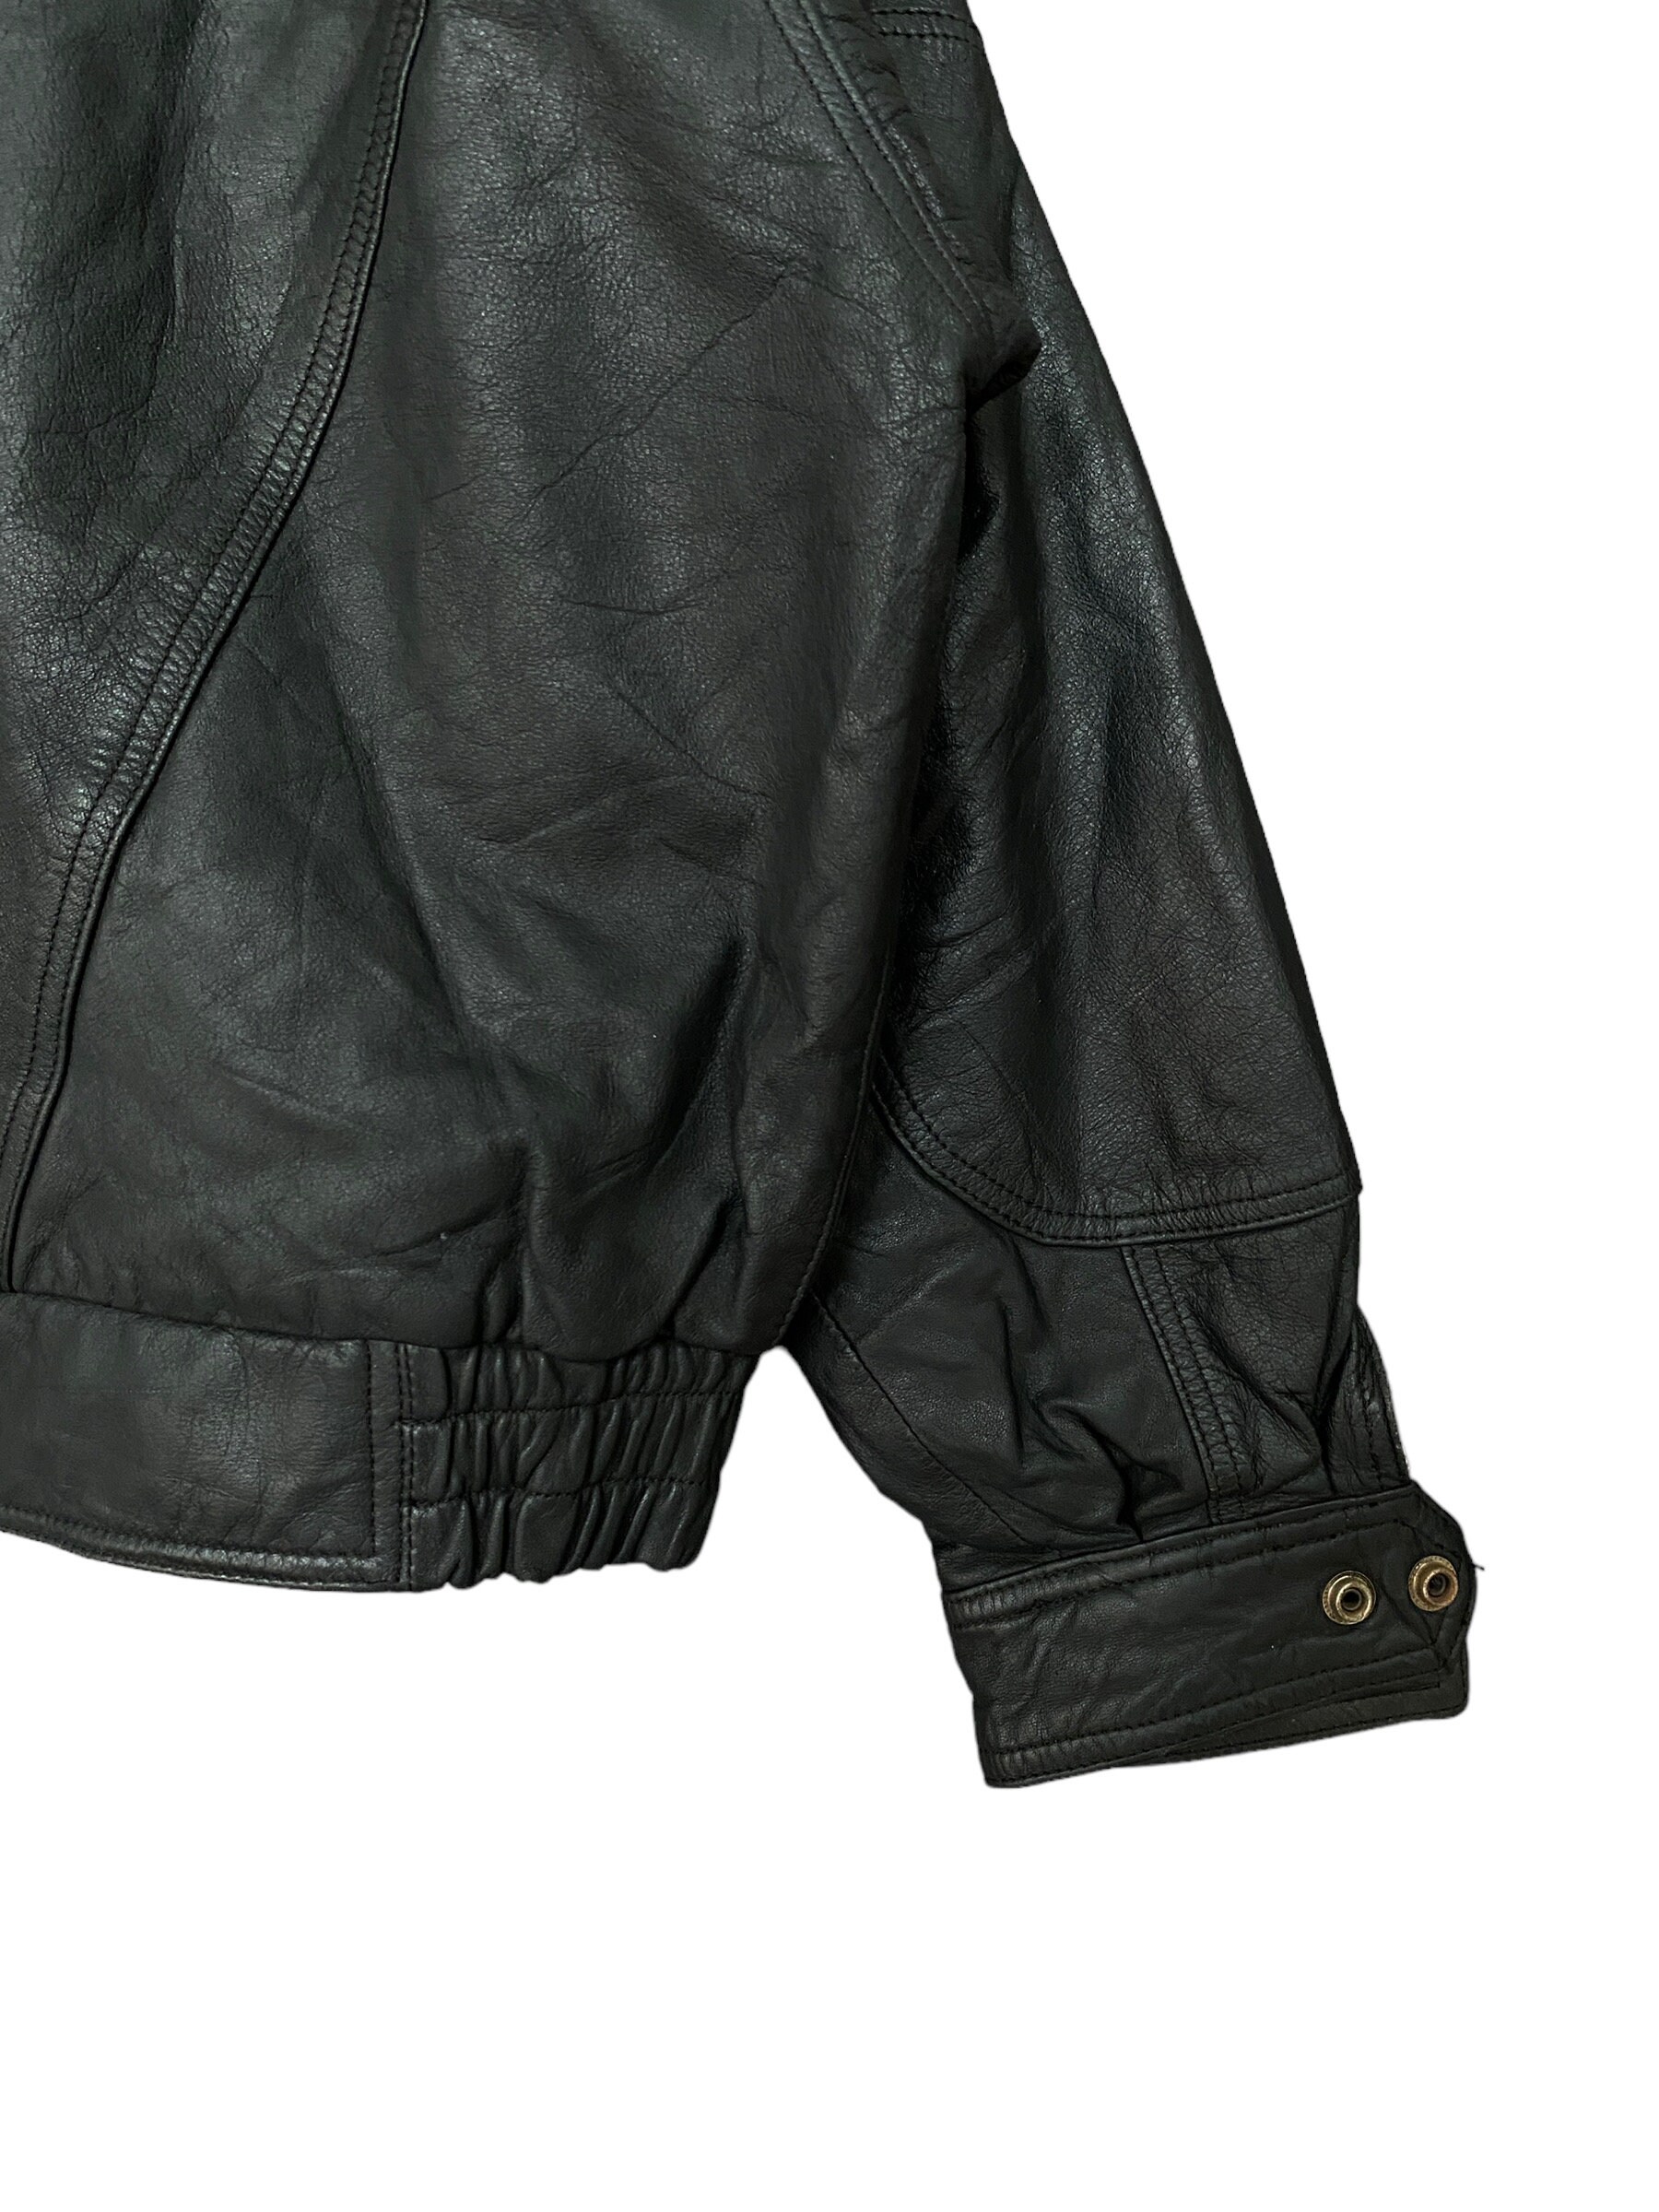 Rare Vintage Valentino Uomo Leather Jacket 1990s - Etsy